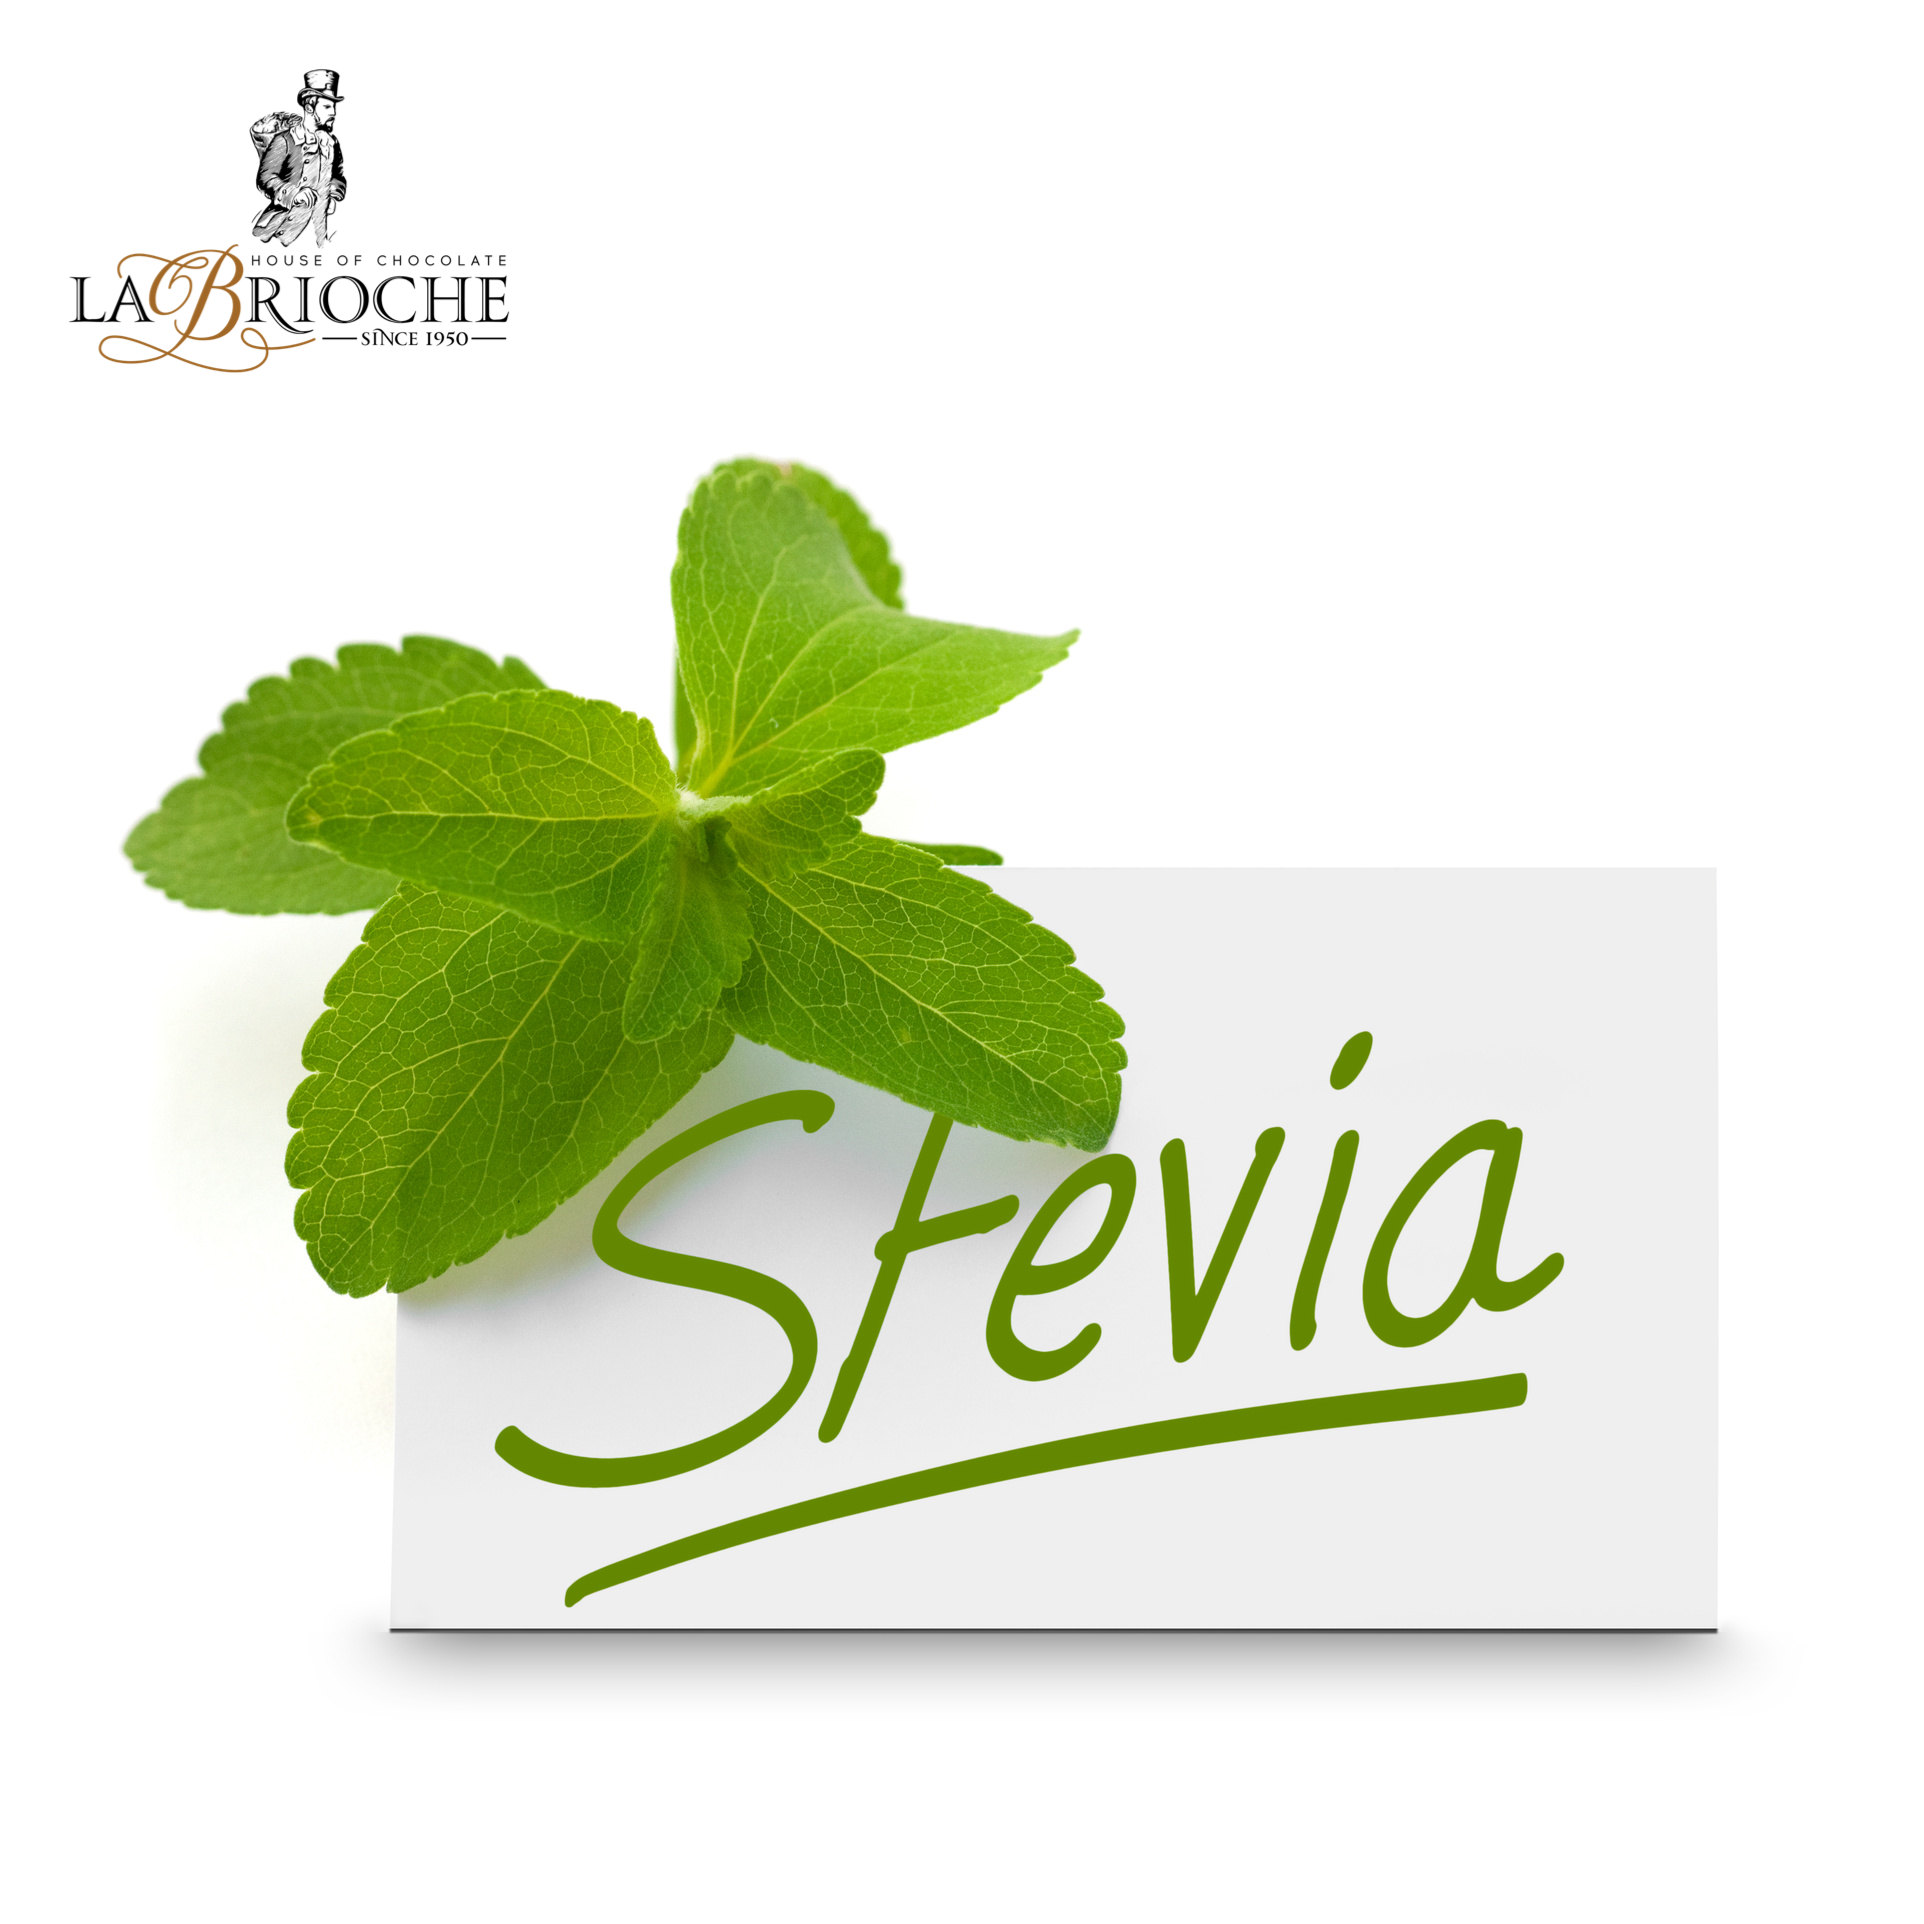 The Sweetener Stevia